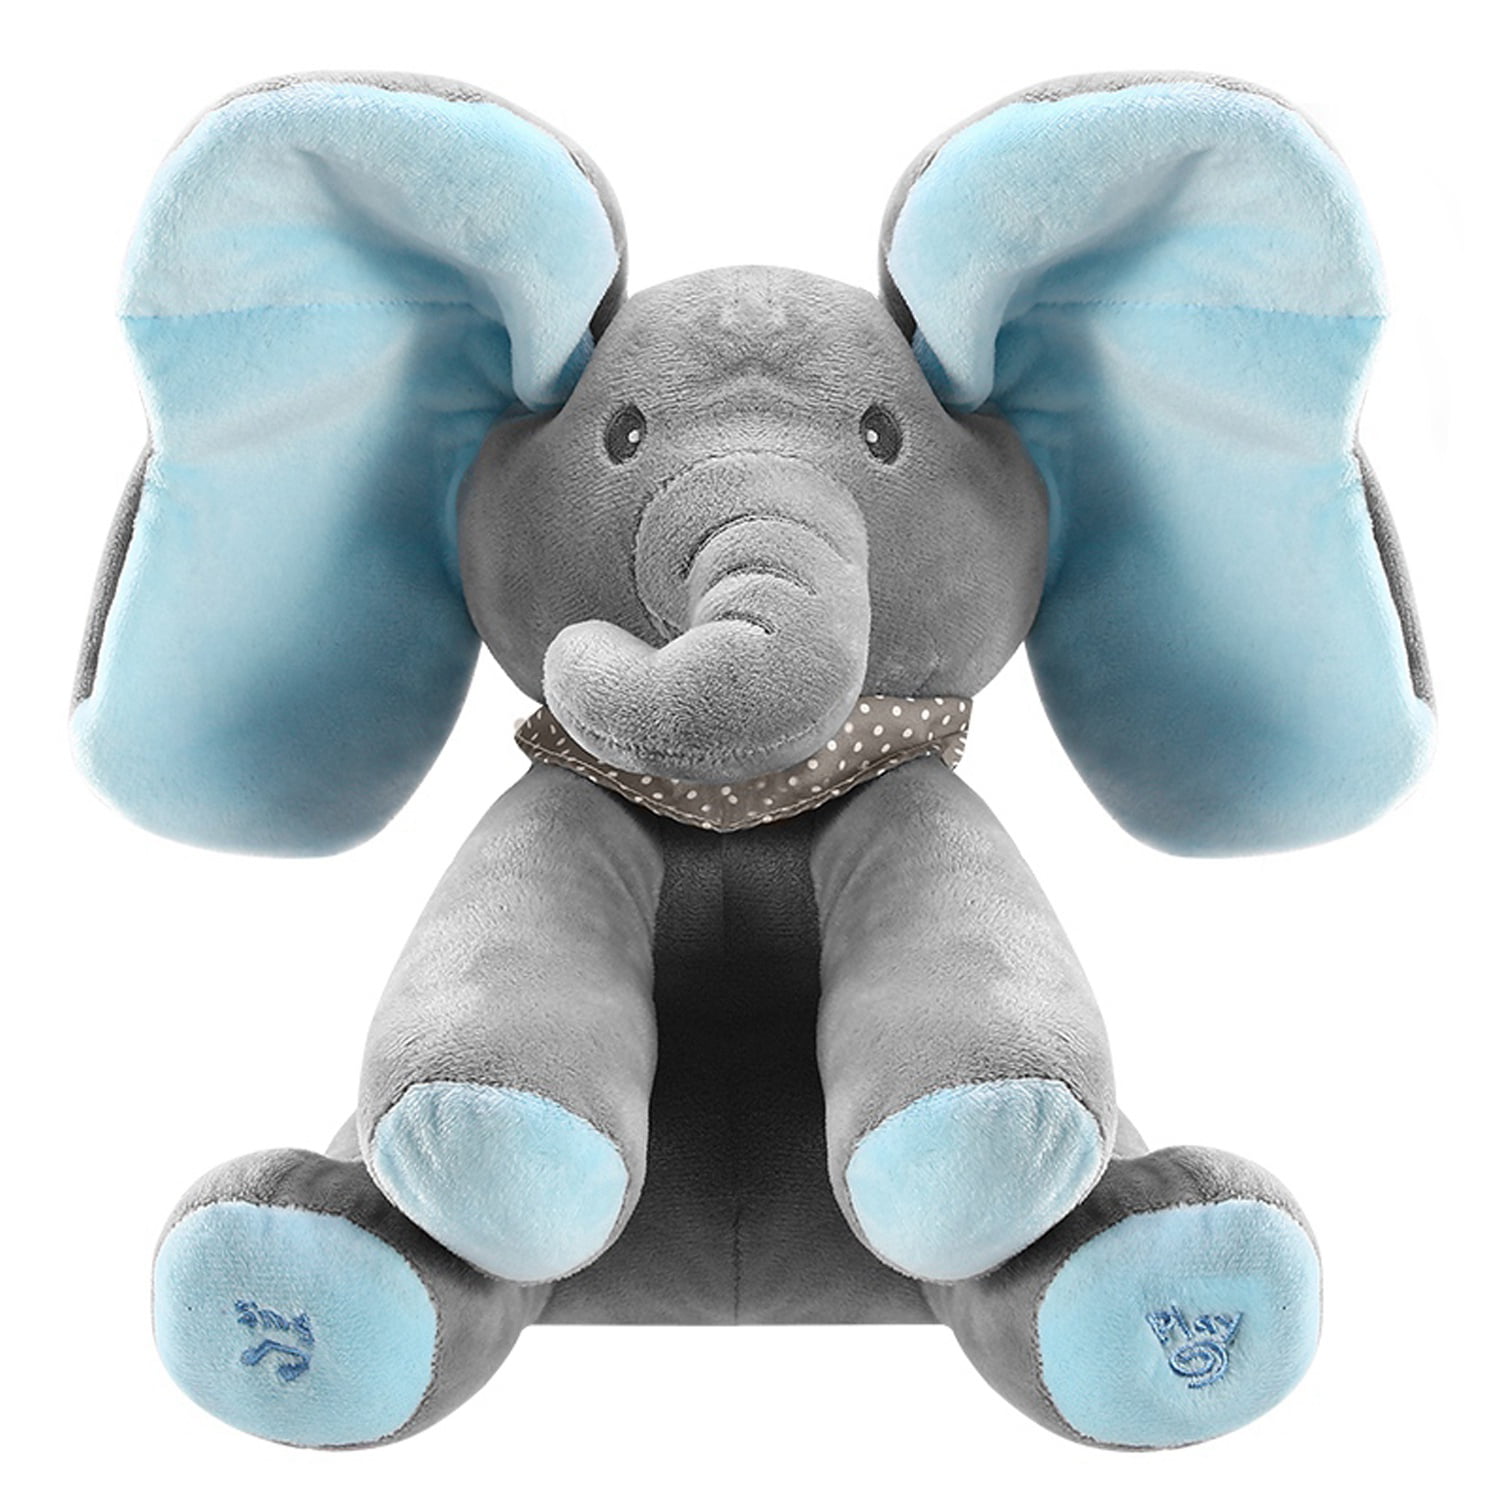 12" Plush Stuffed Elephant Doll  Peek-a-Boo Elephant  Talking  Singing 